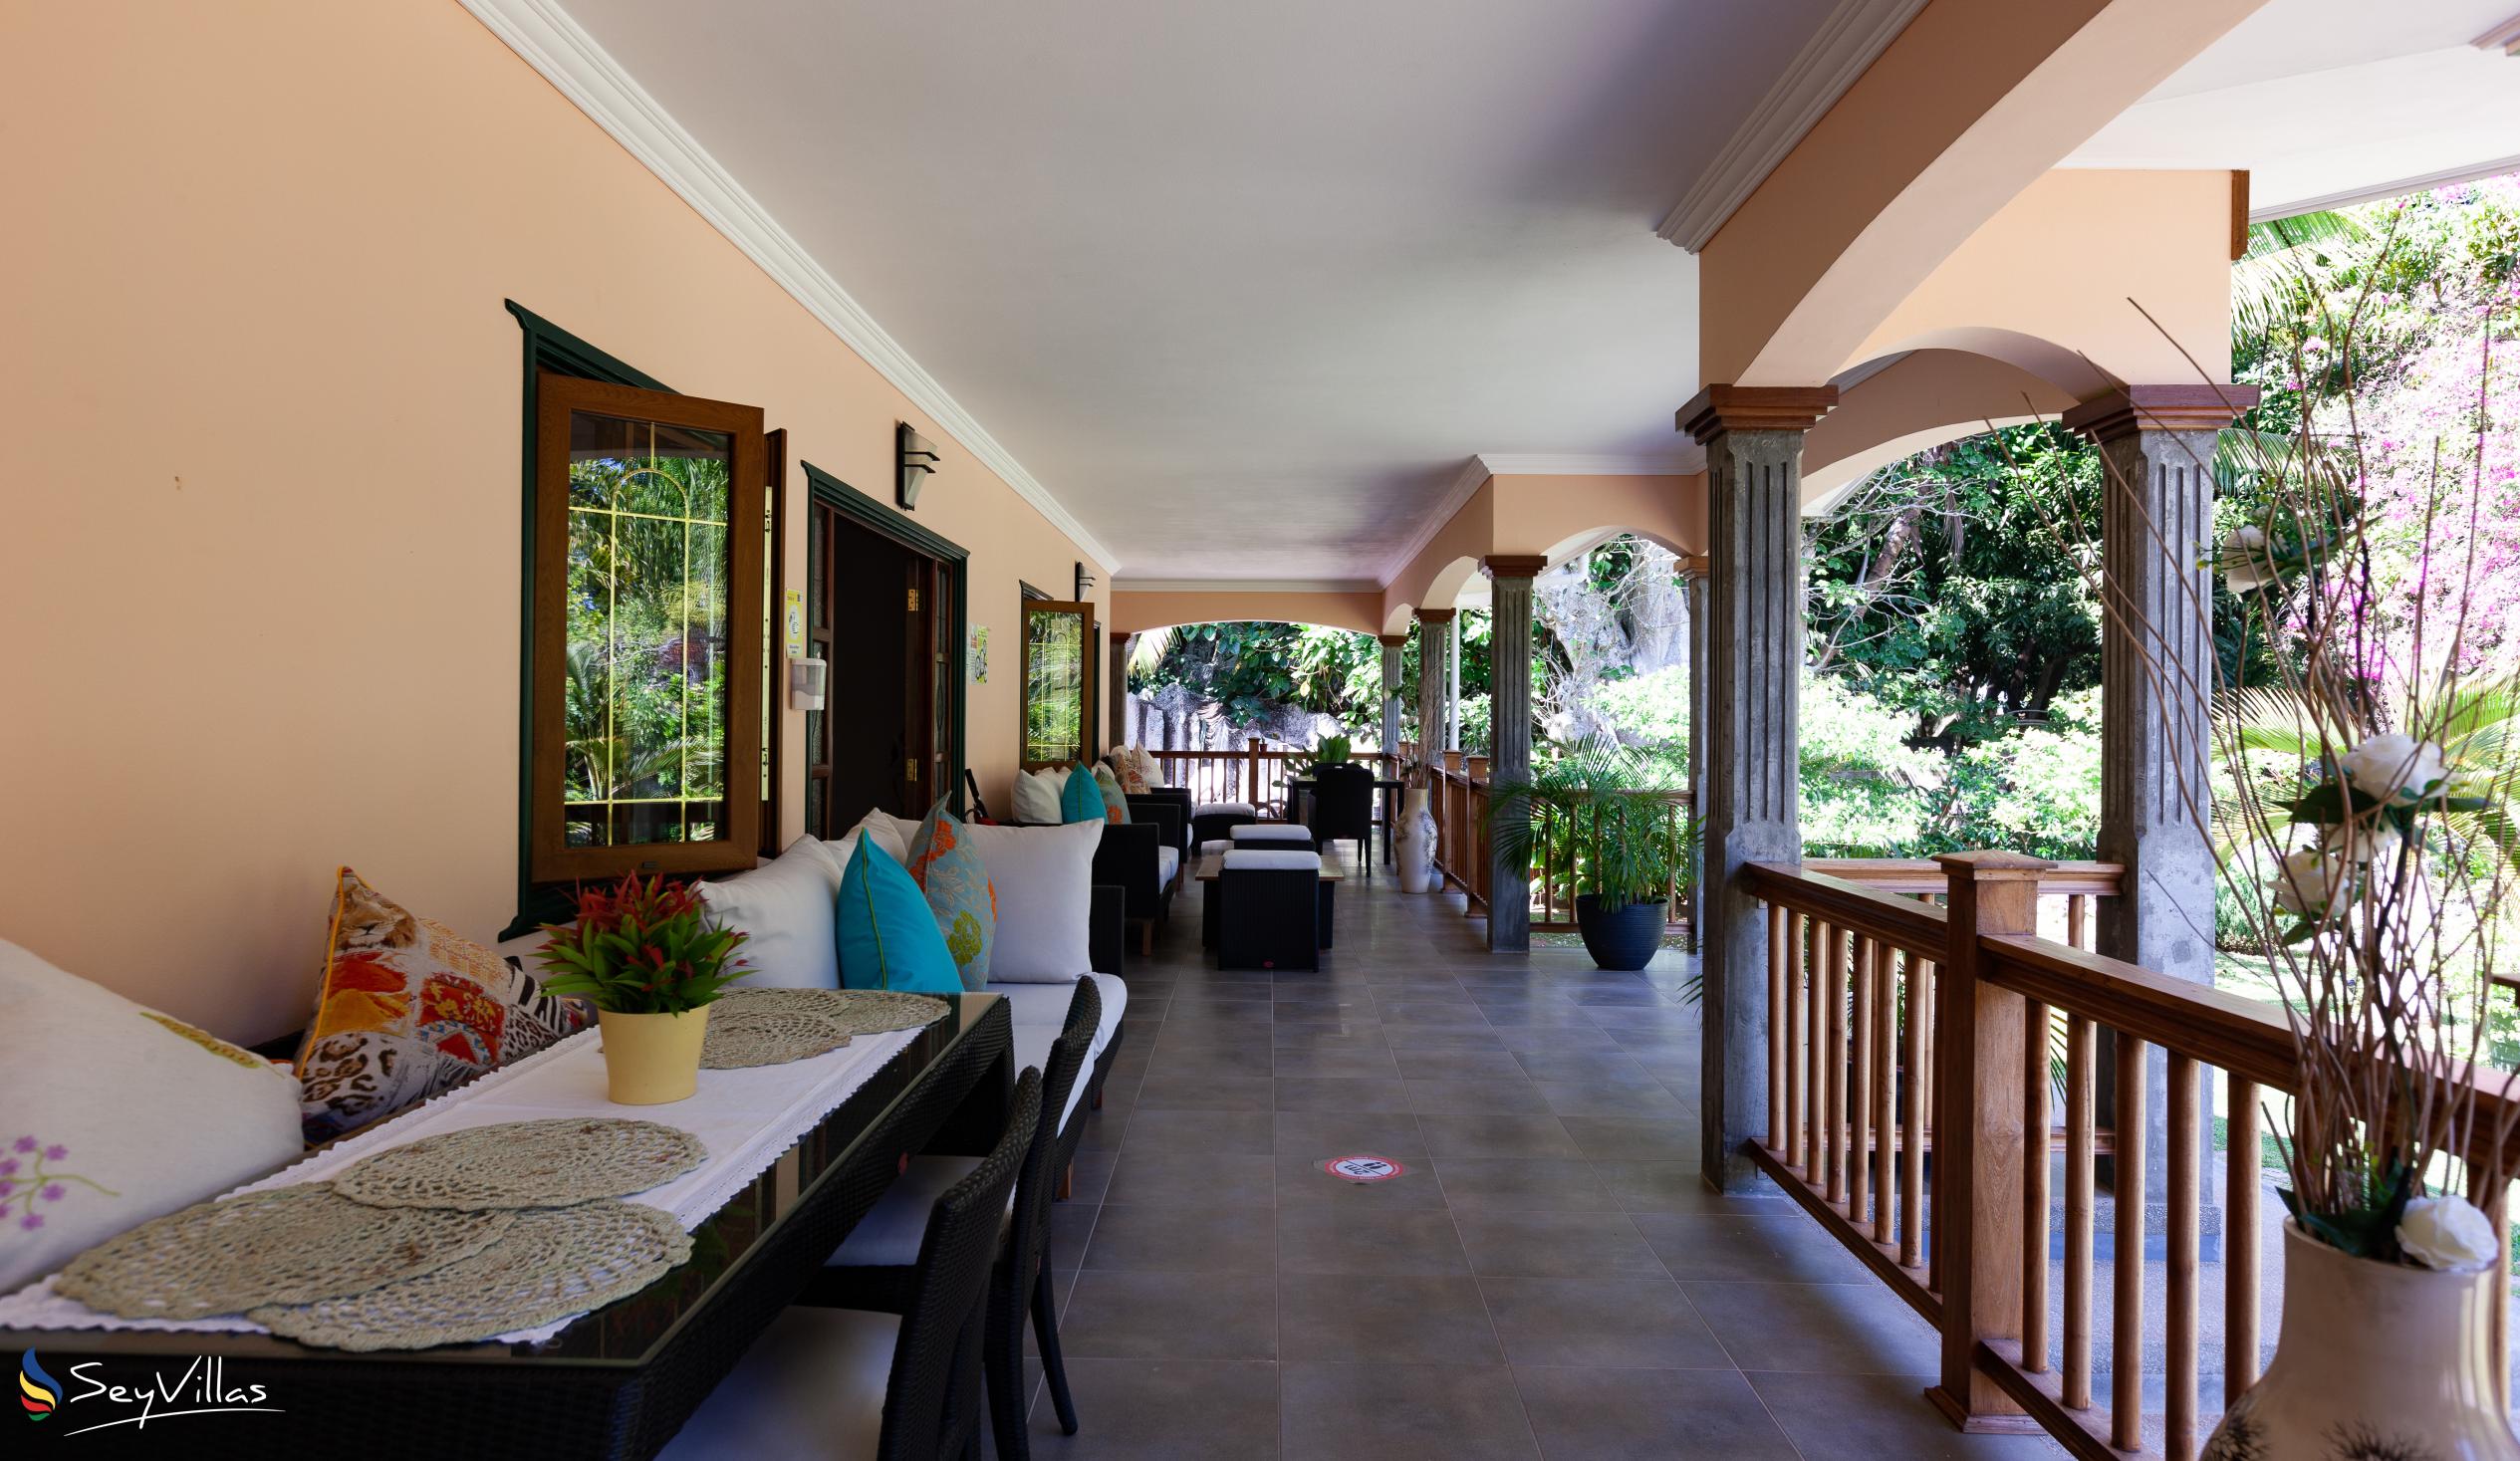 Photo 10: Pension Michel - Villa Roche Bois - Indoor area - La Digue (Seychelles)